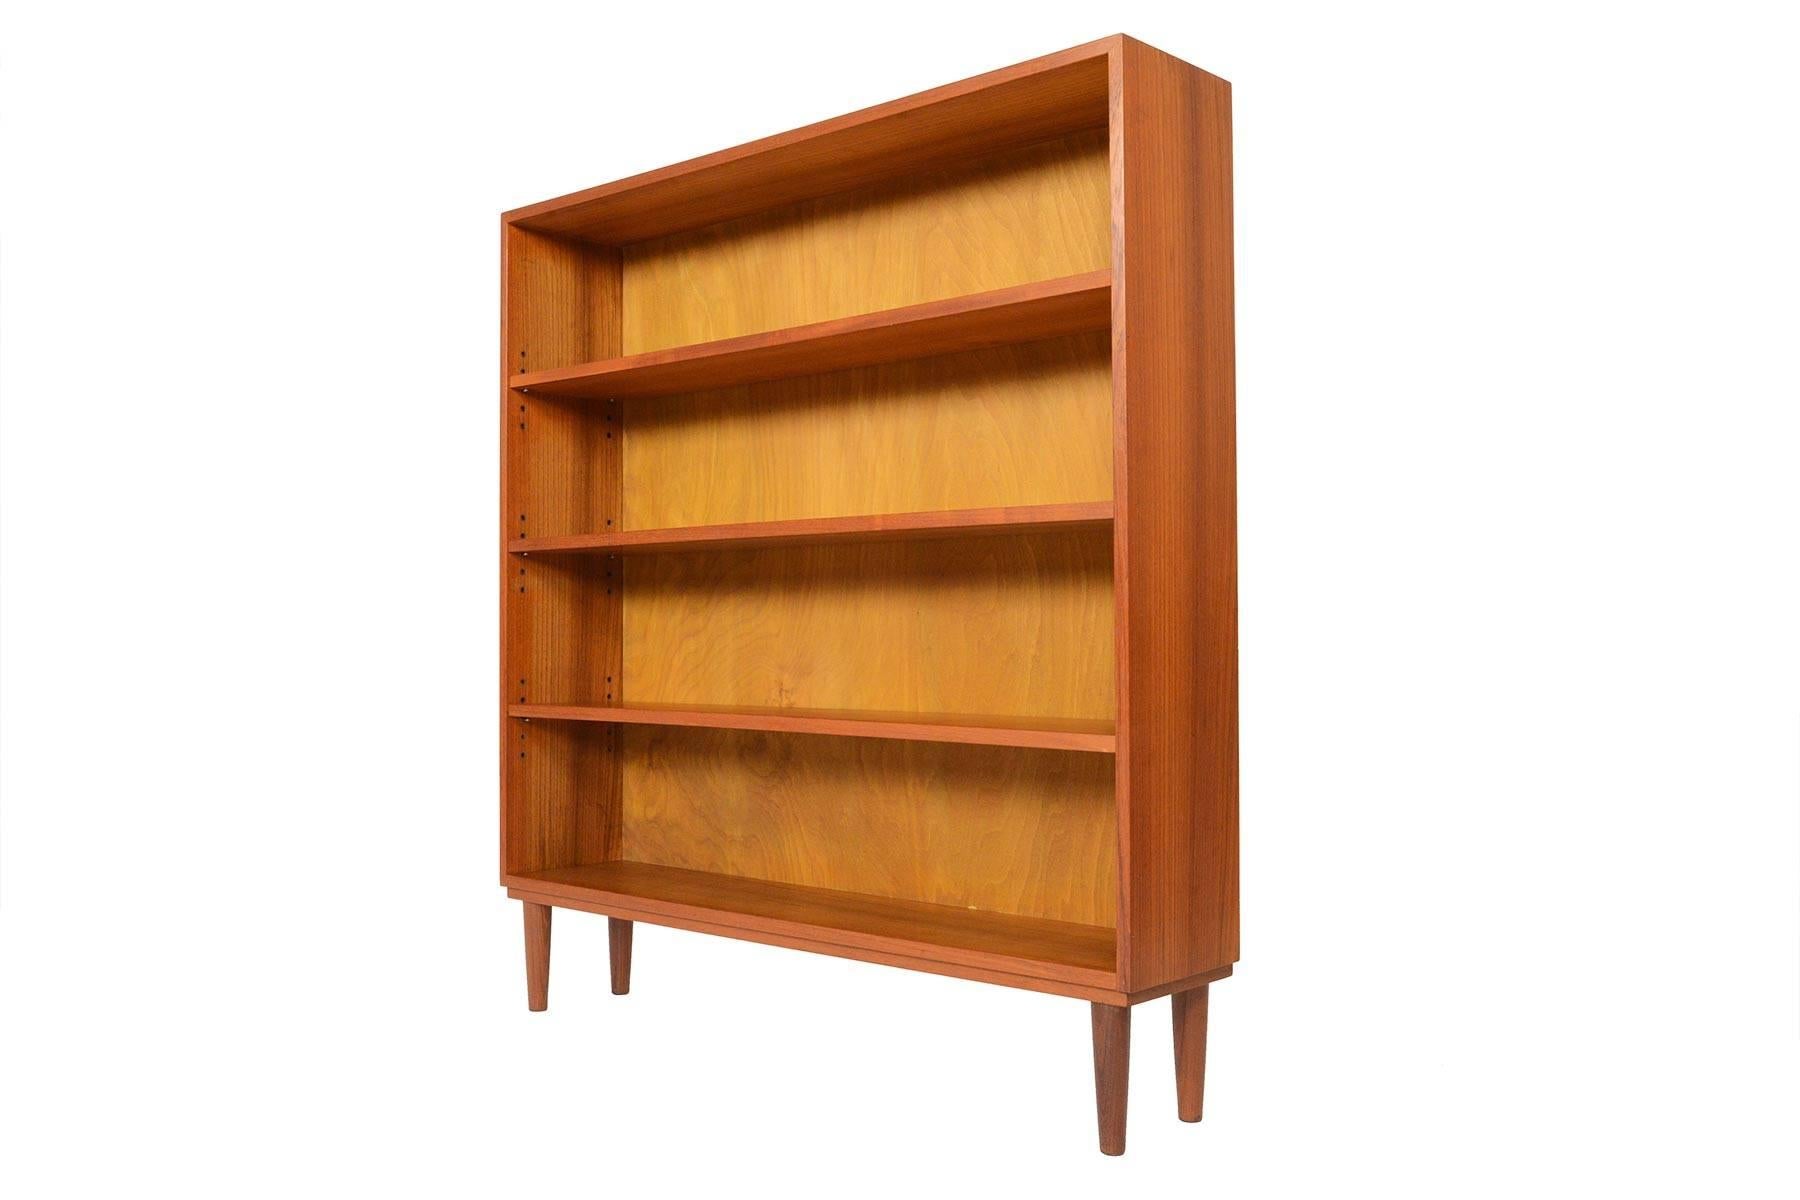 20th Century Narrow Danish Modern Midcentury Bookcase in Teak #1